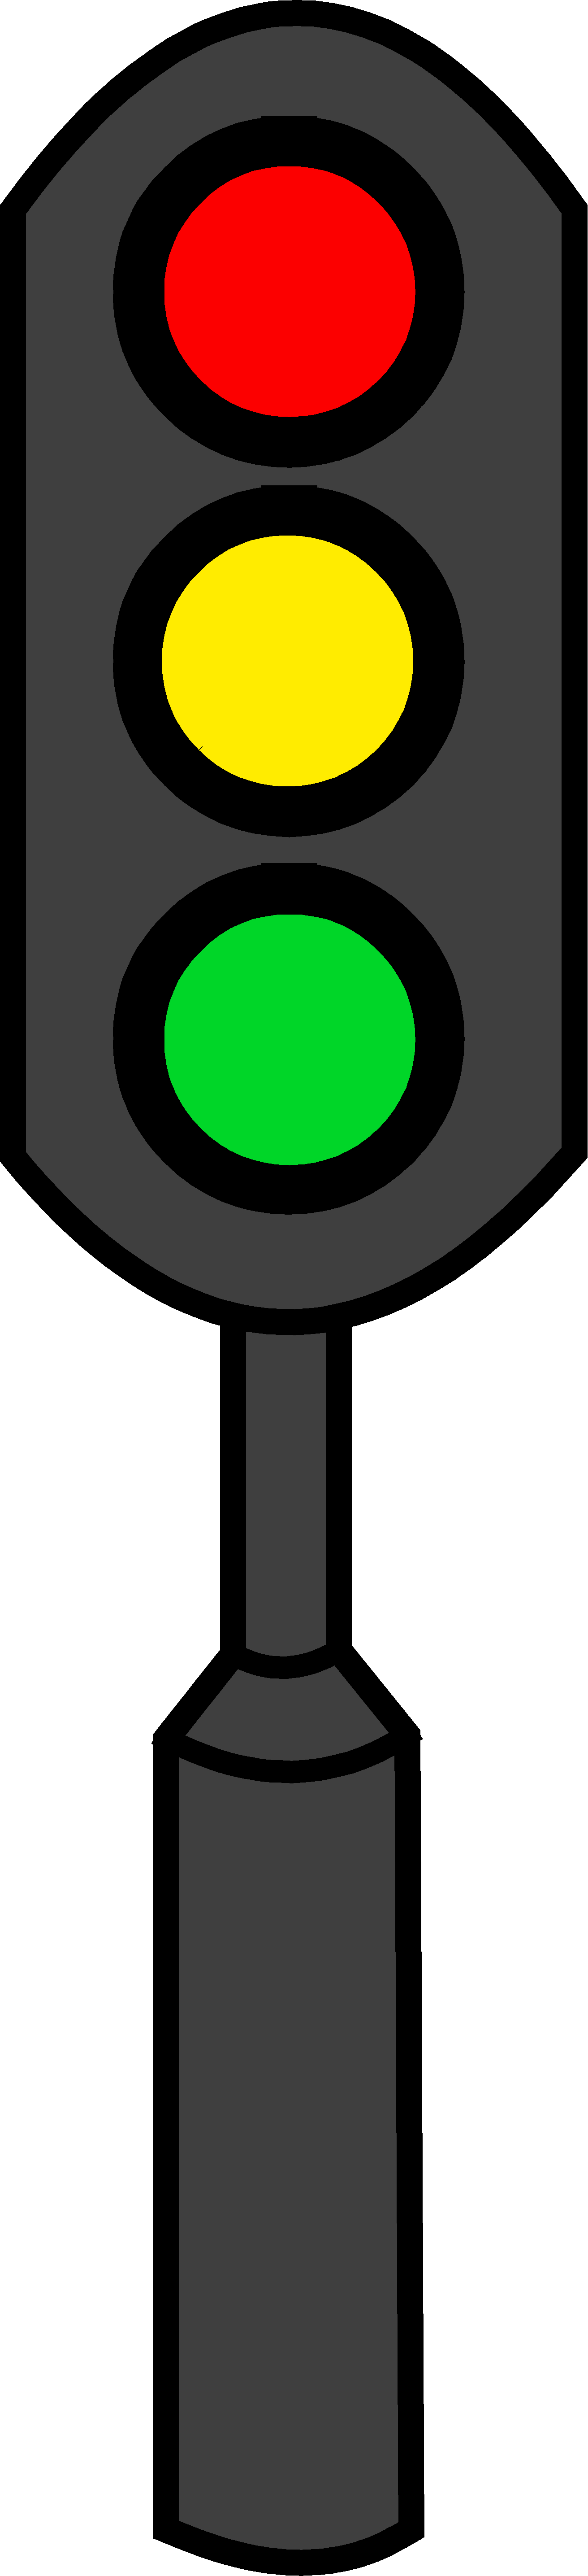 Traffic Light Drawing - ClipArt Best